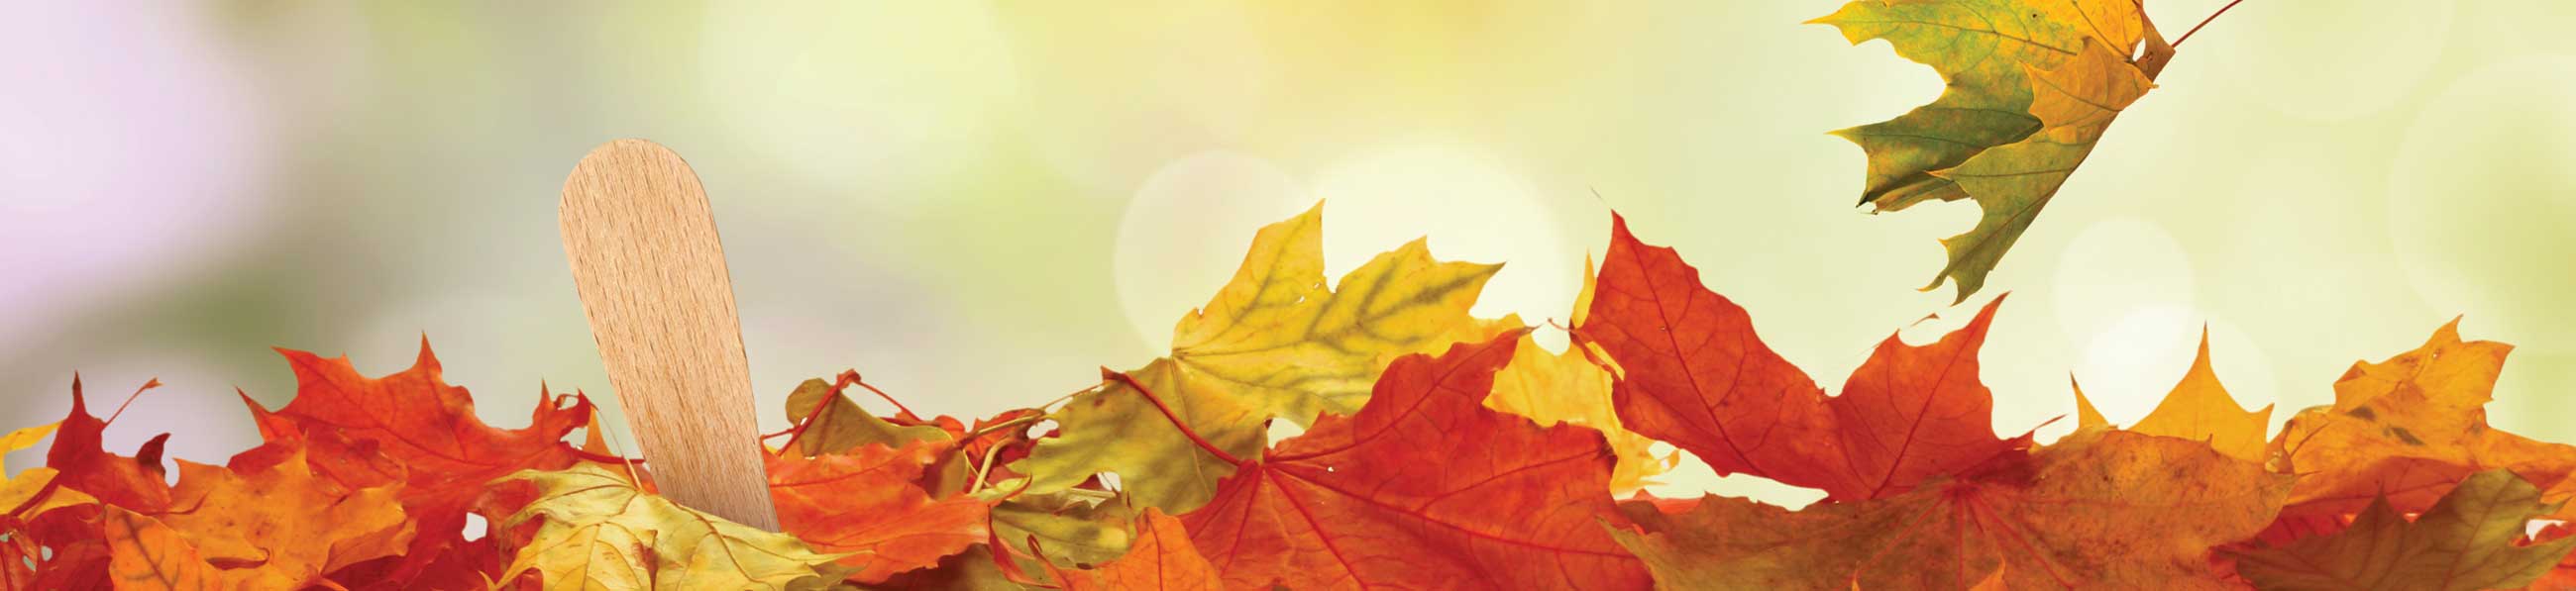 clip art banner autumn - photo #45